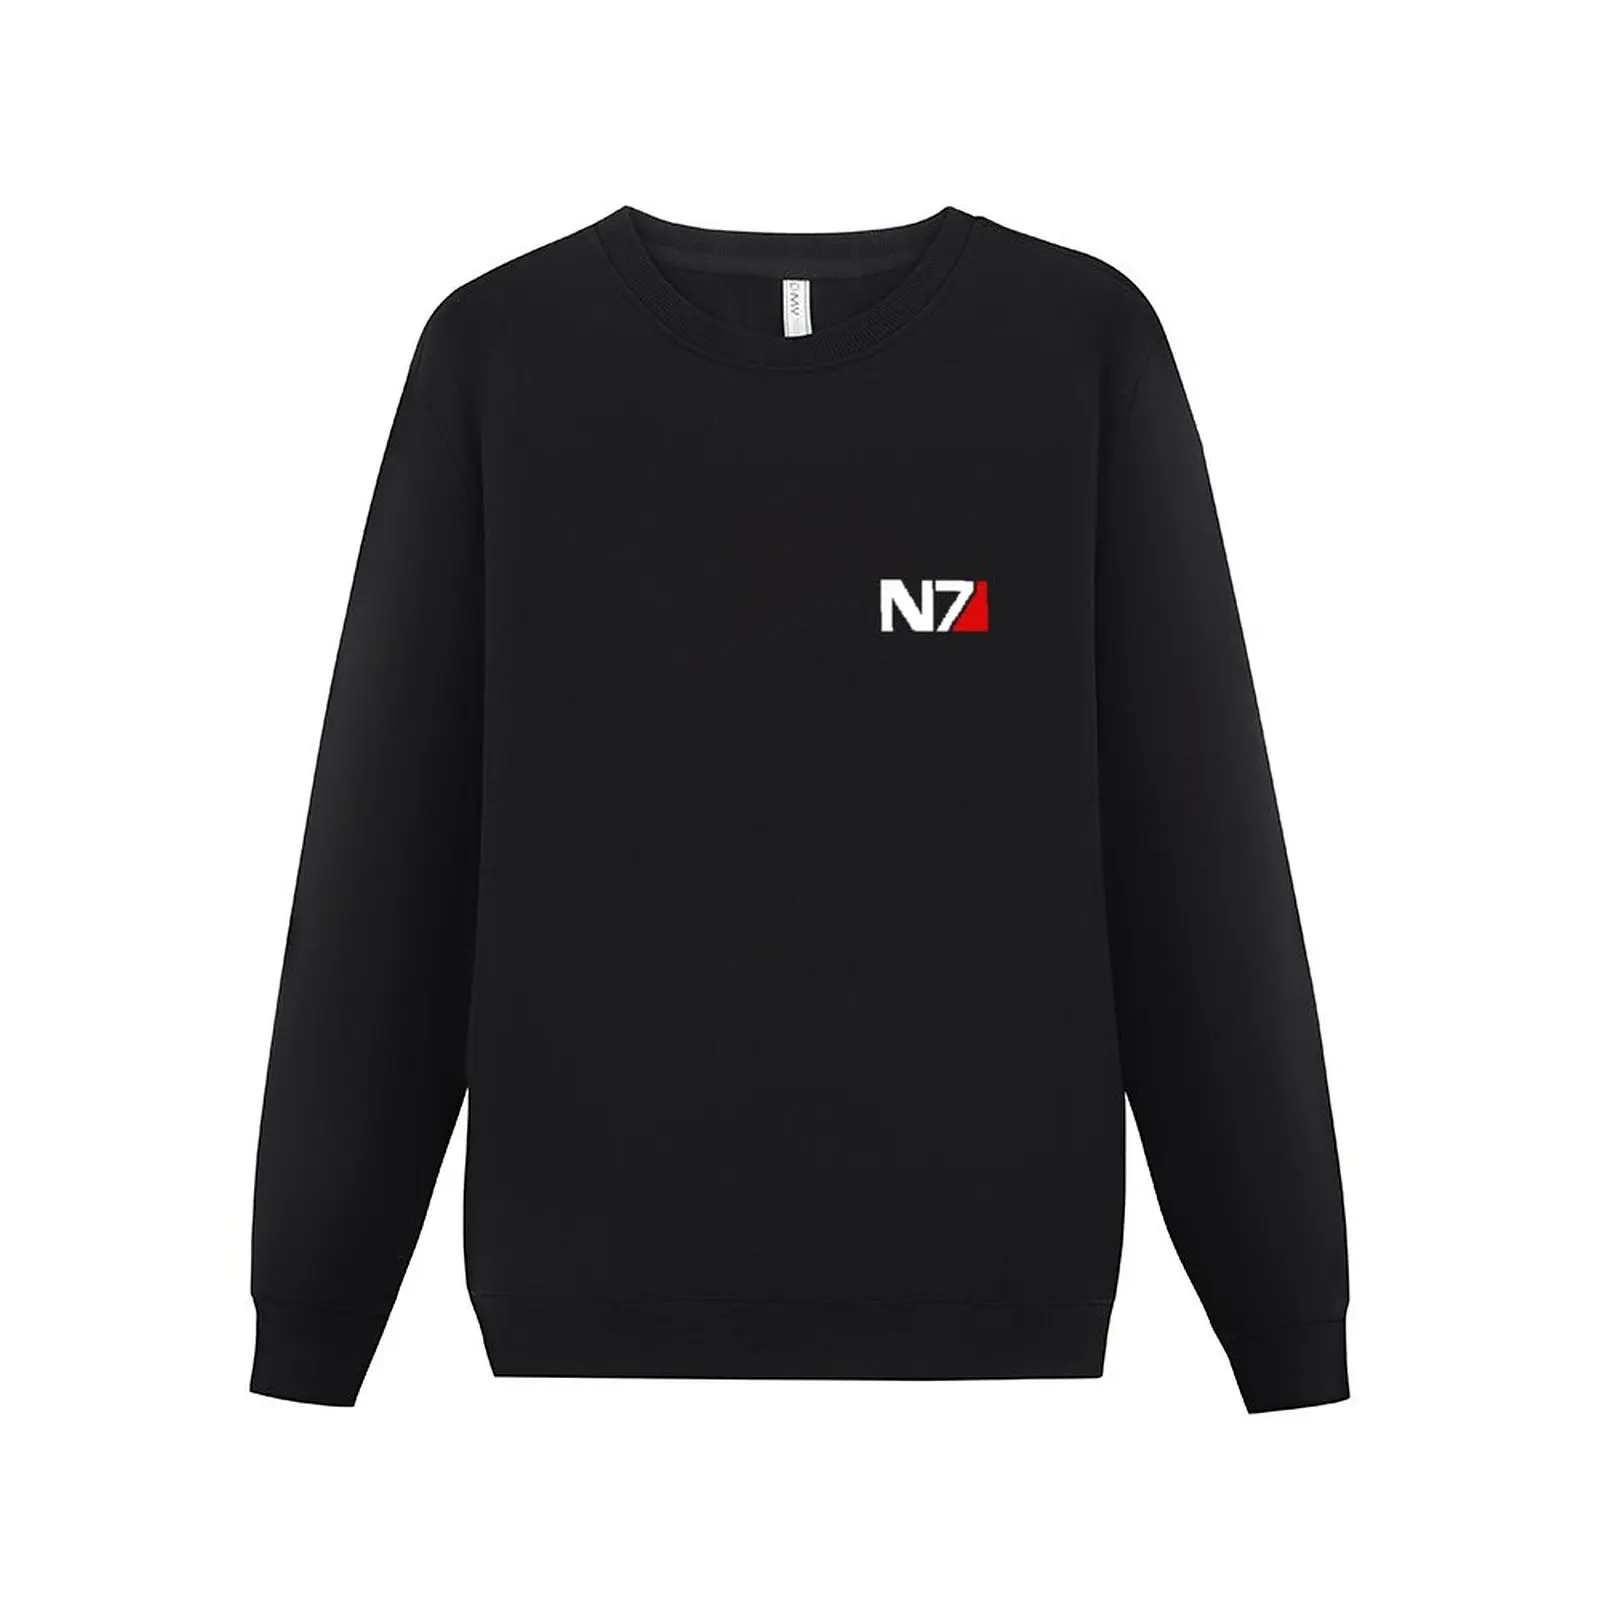 

New Pixellated N7 Spectre Badge Mass Effect Stripeless Sweatshirt men's clothing mens clothing hooded shirt anime sweatshirt